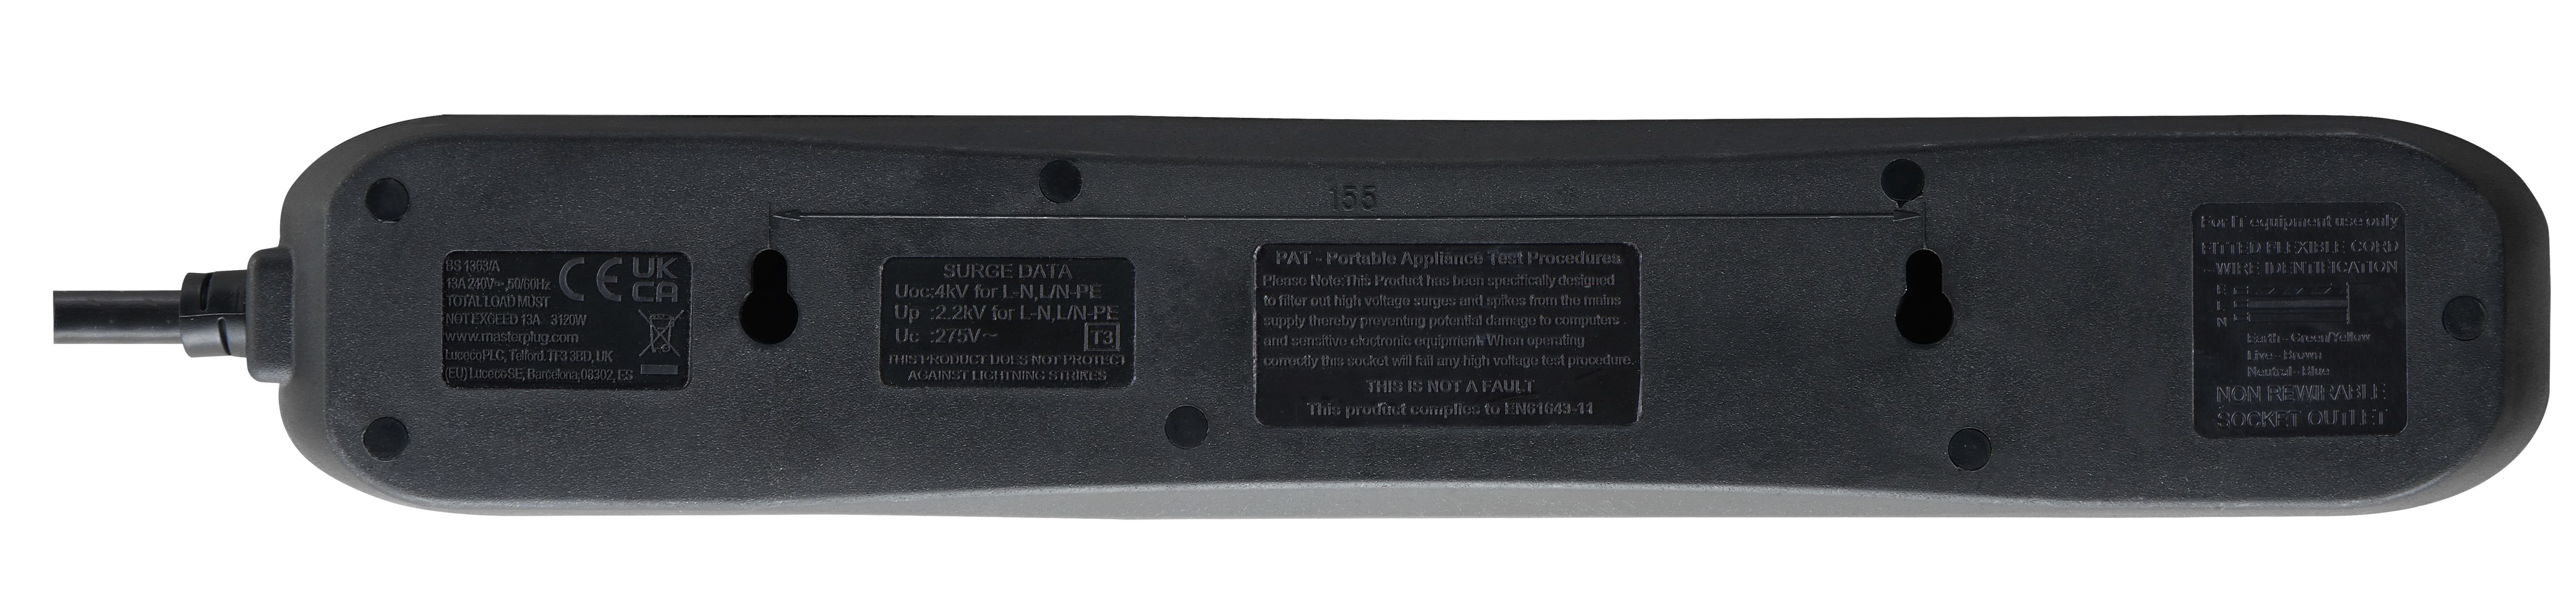 Masterplug Surge Black 13A 4 socket Extension lead with USB, 1m